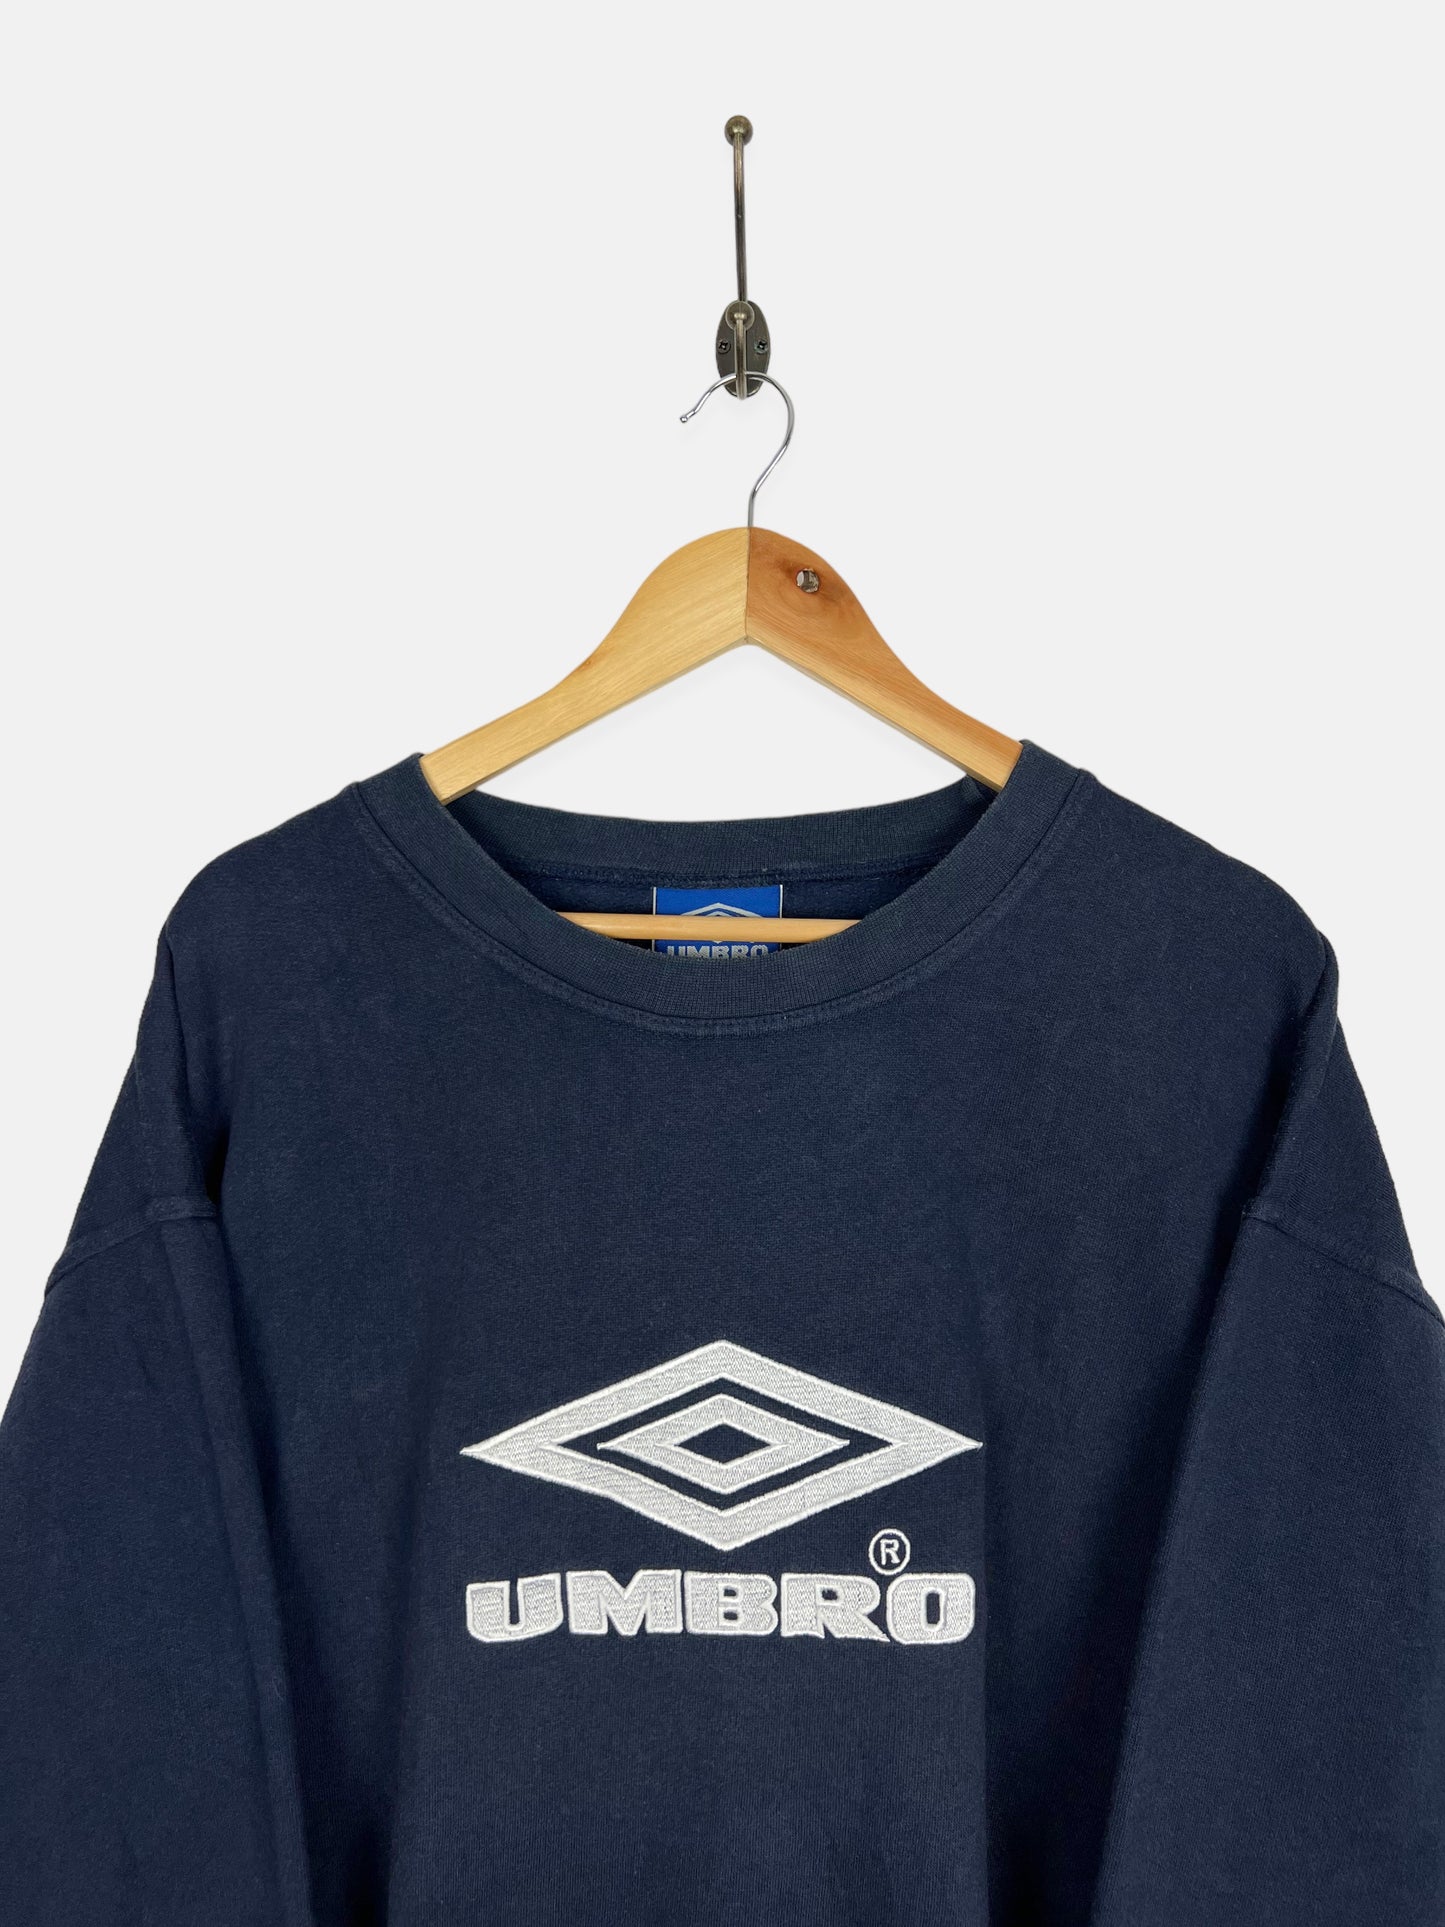 90's Umbro Embroidered Vintage Lightweight Sweatshirt Size M